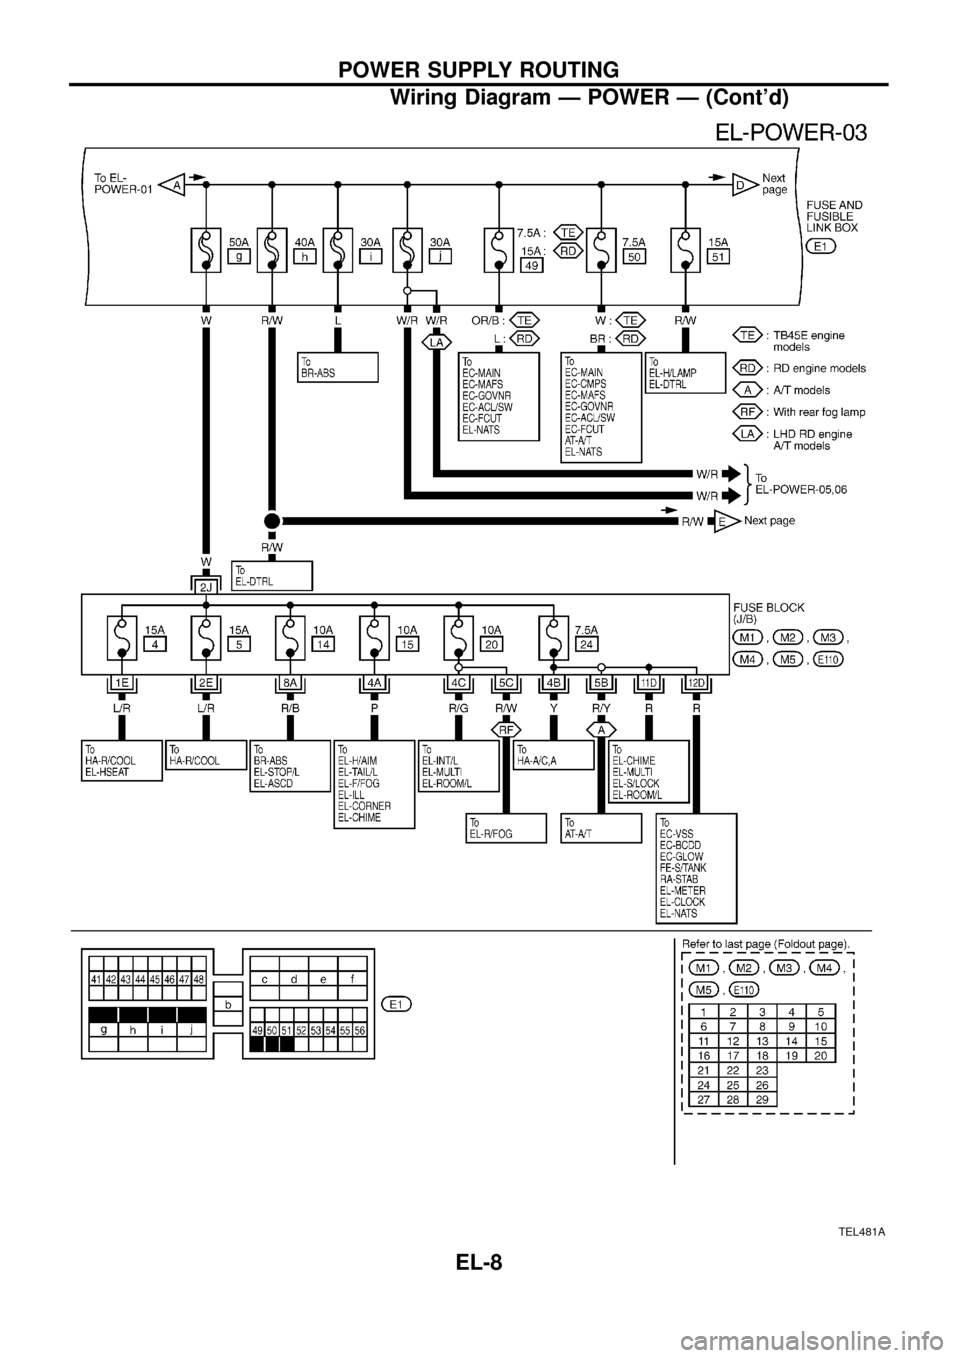 NISSAN PATROL 1998 Y61 / 5.G Electrical System Workshop Manual TEL481A
POWER SUPPLY ROUTING
Wiring Diagram Ð POWER Ð (Contd)
EL-8 